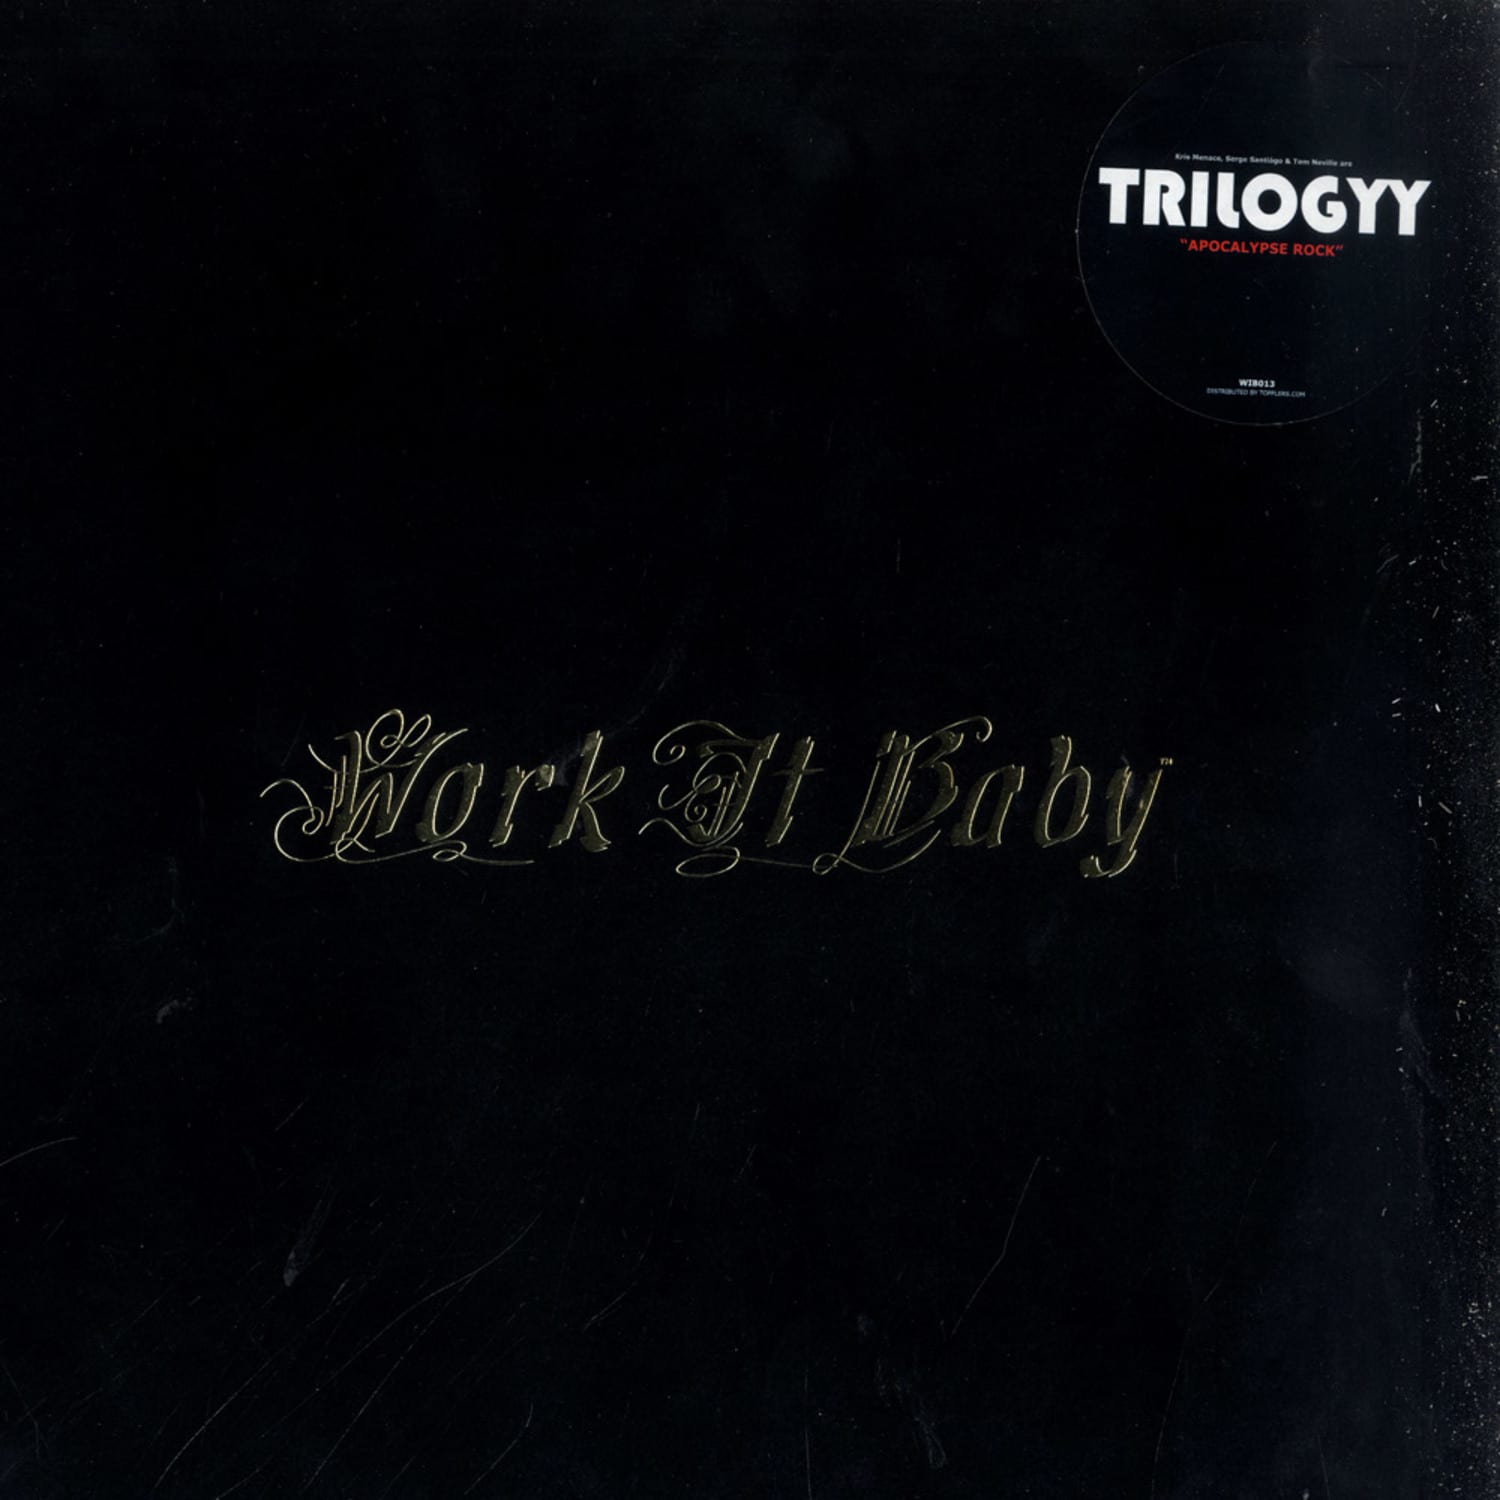 Trilogyy - APOCALYPSE ROCK